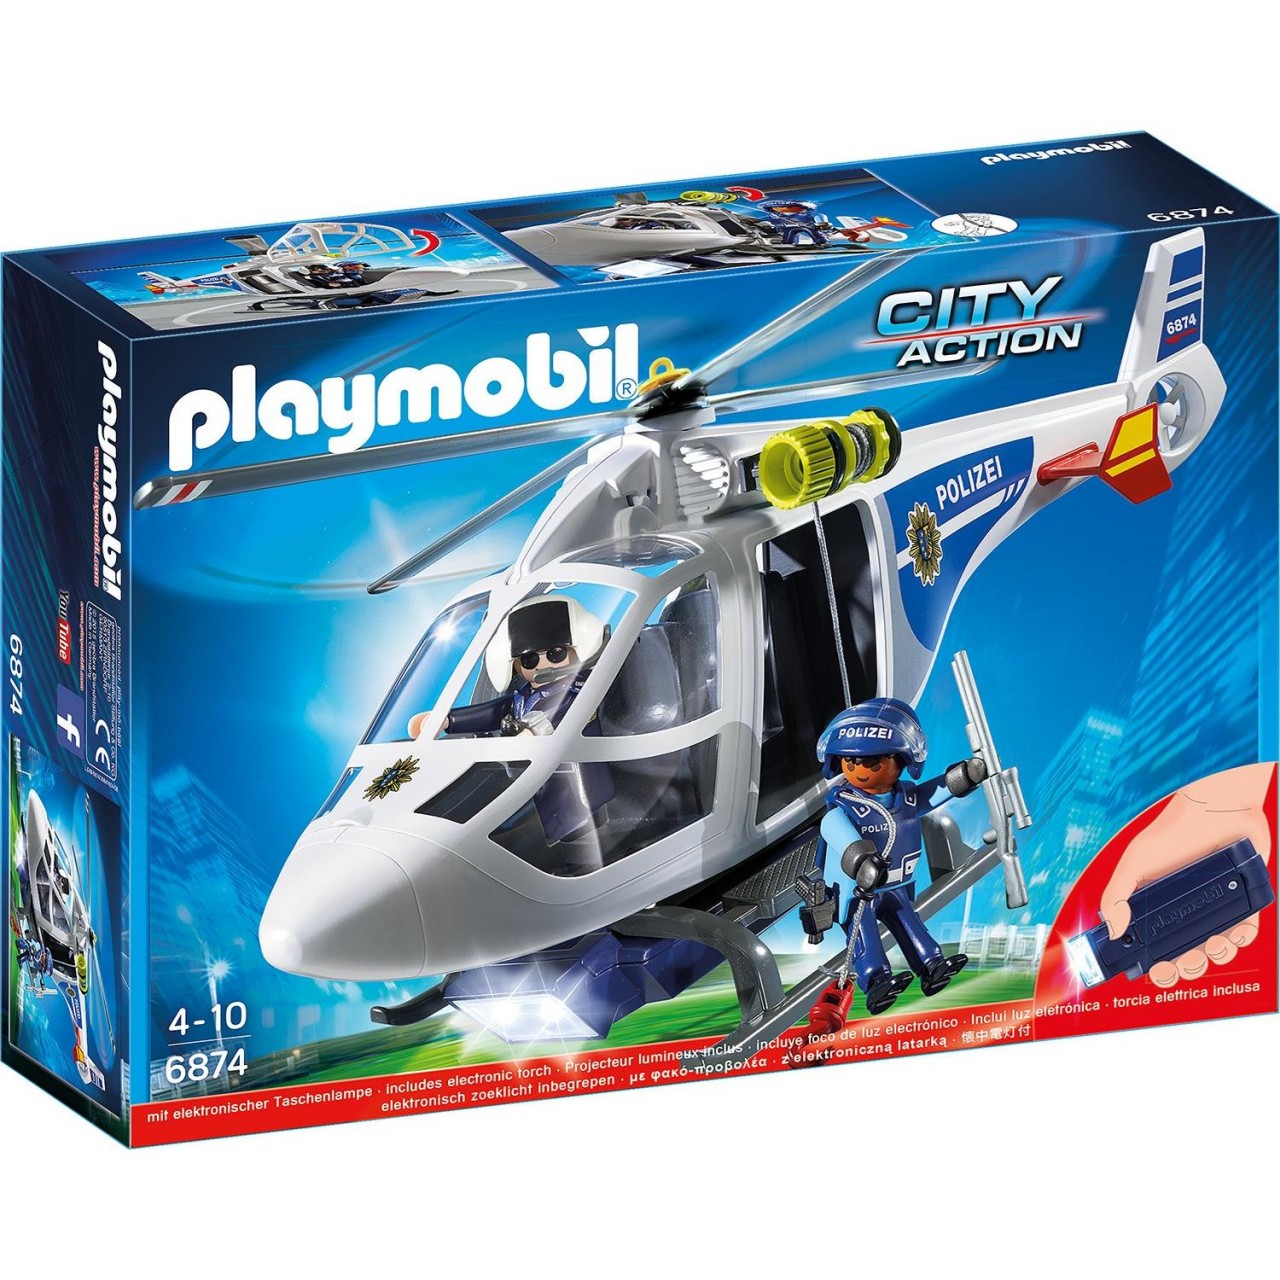 Playmobil 6874 Polizei-Helikopter mit LED-Suchscheinwerfer